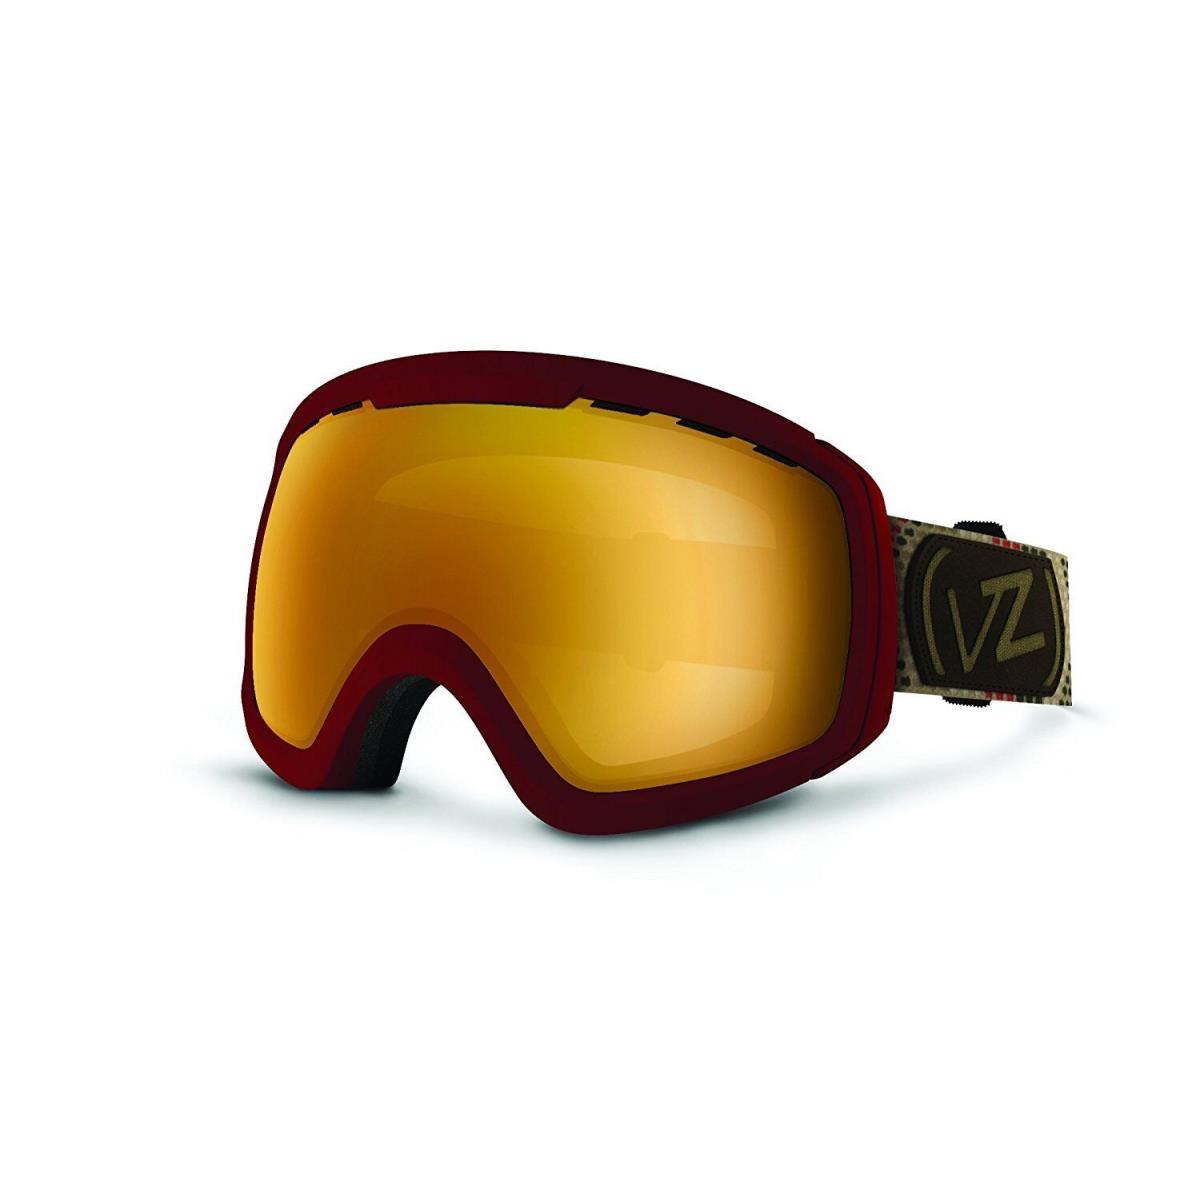 Vonzipper Feenom Nls Ski / Snow / Board Goggles Multiple Colors Sale J.J Red Satin/Copper Chrome